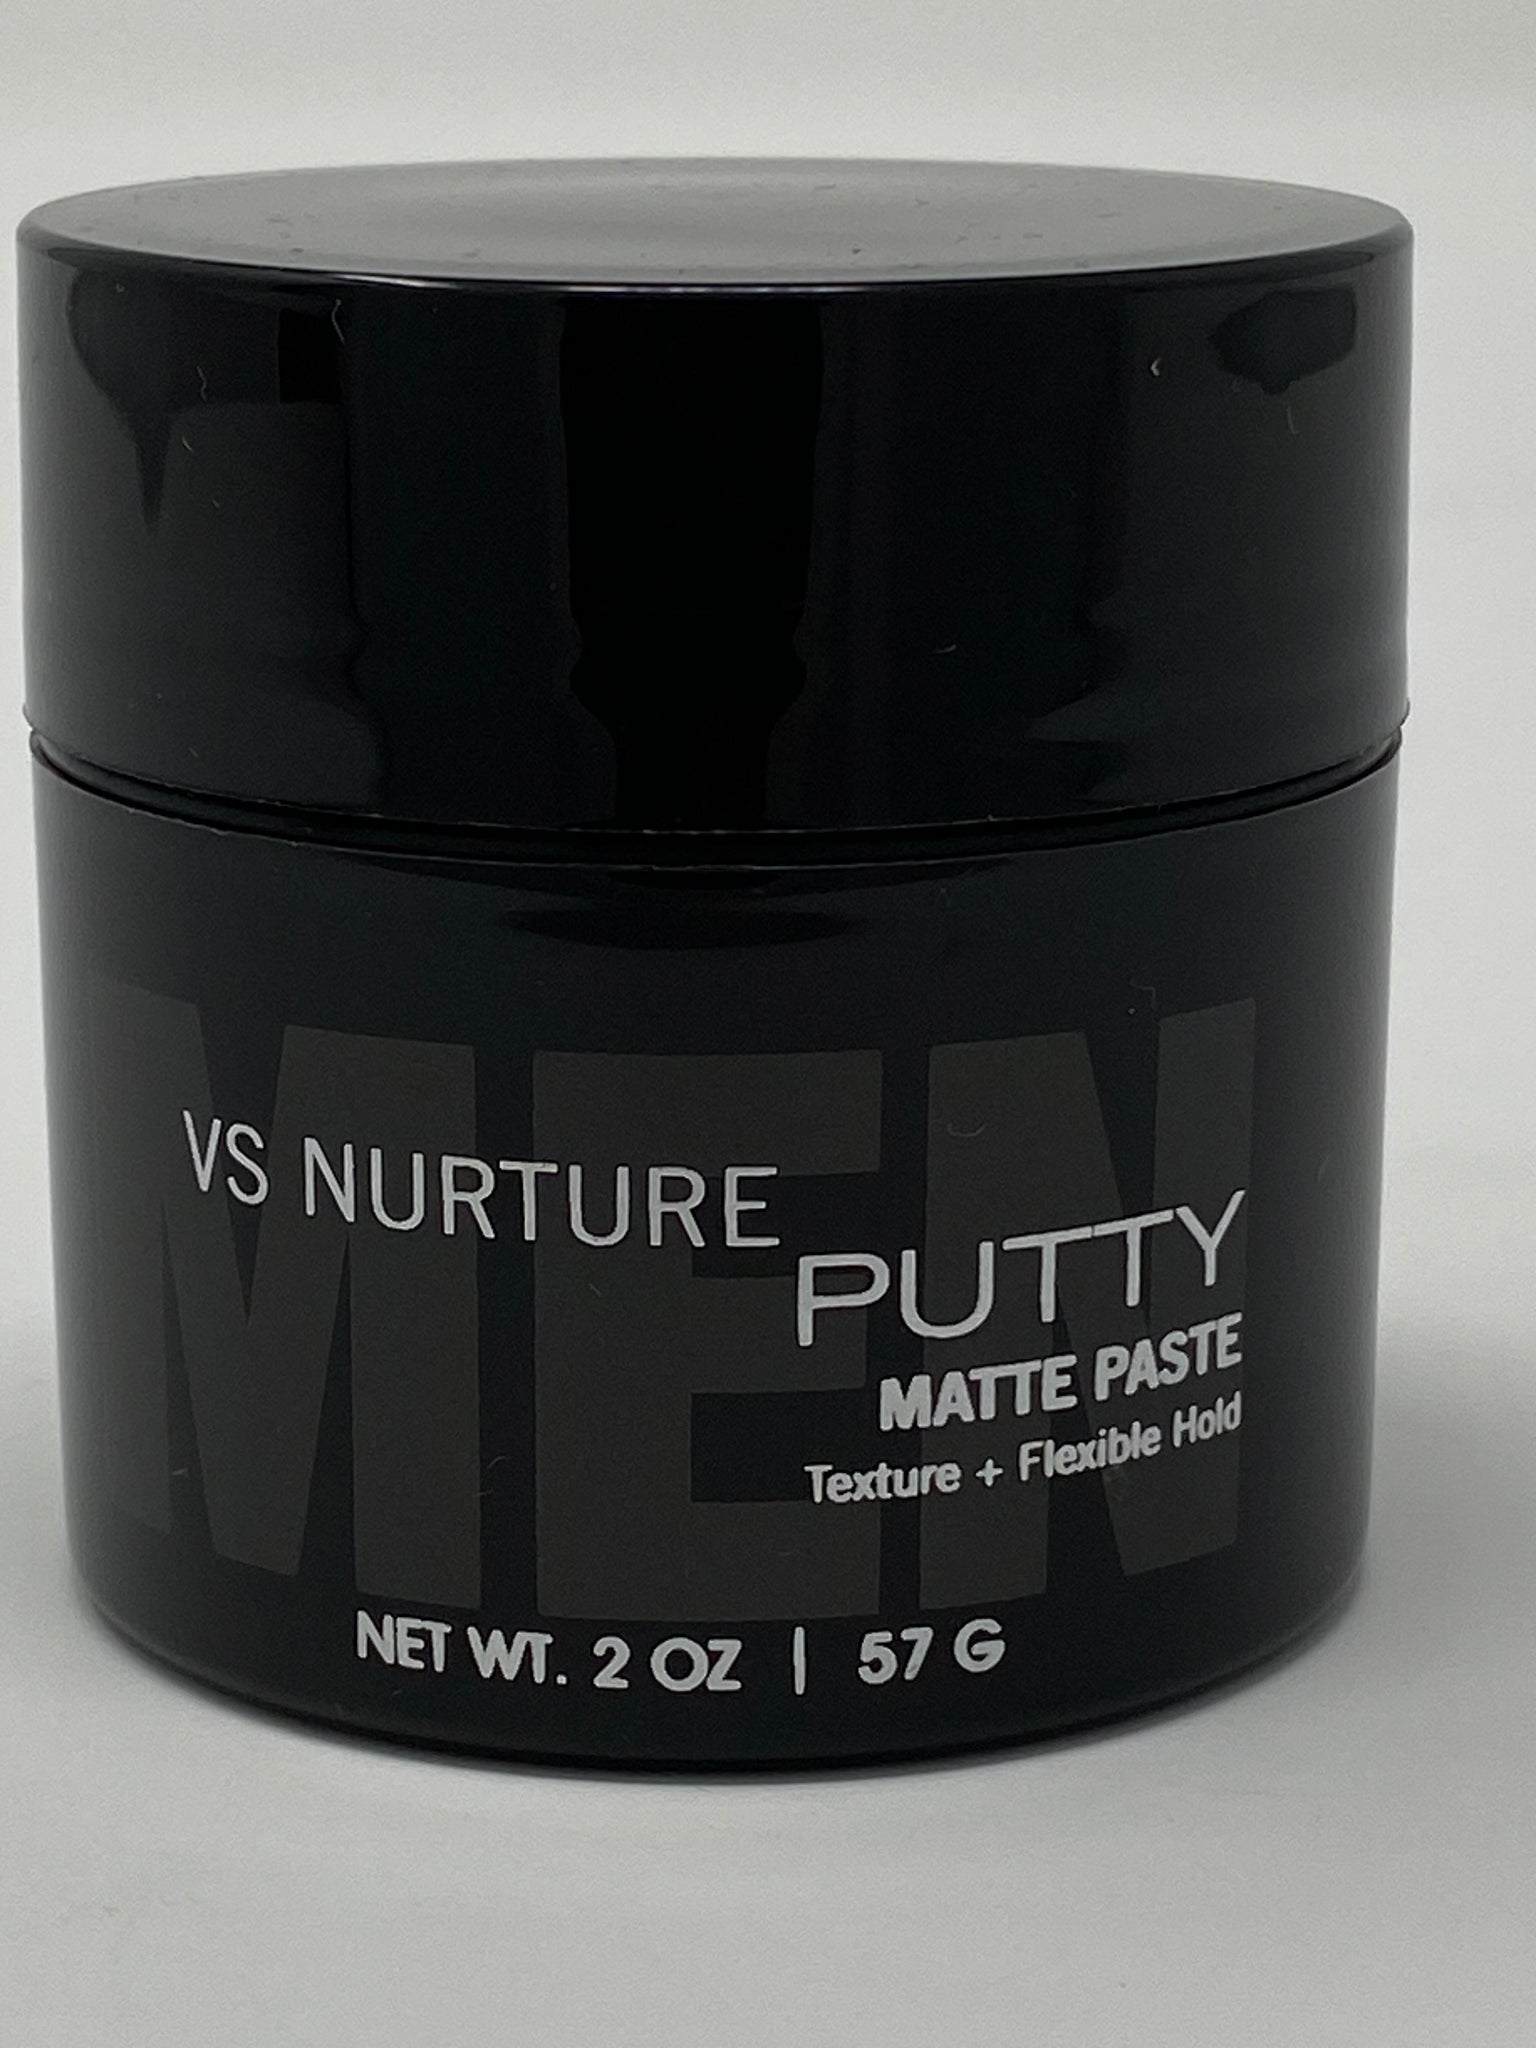 Putty Matte Paste Texture + Flexible Hold